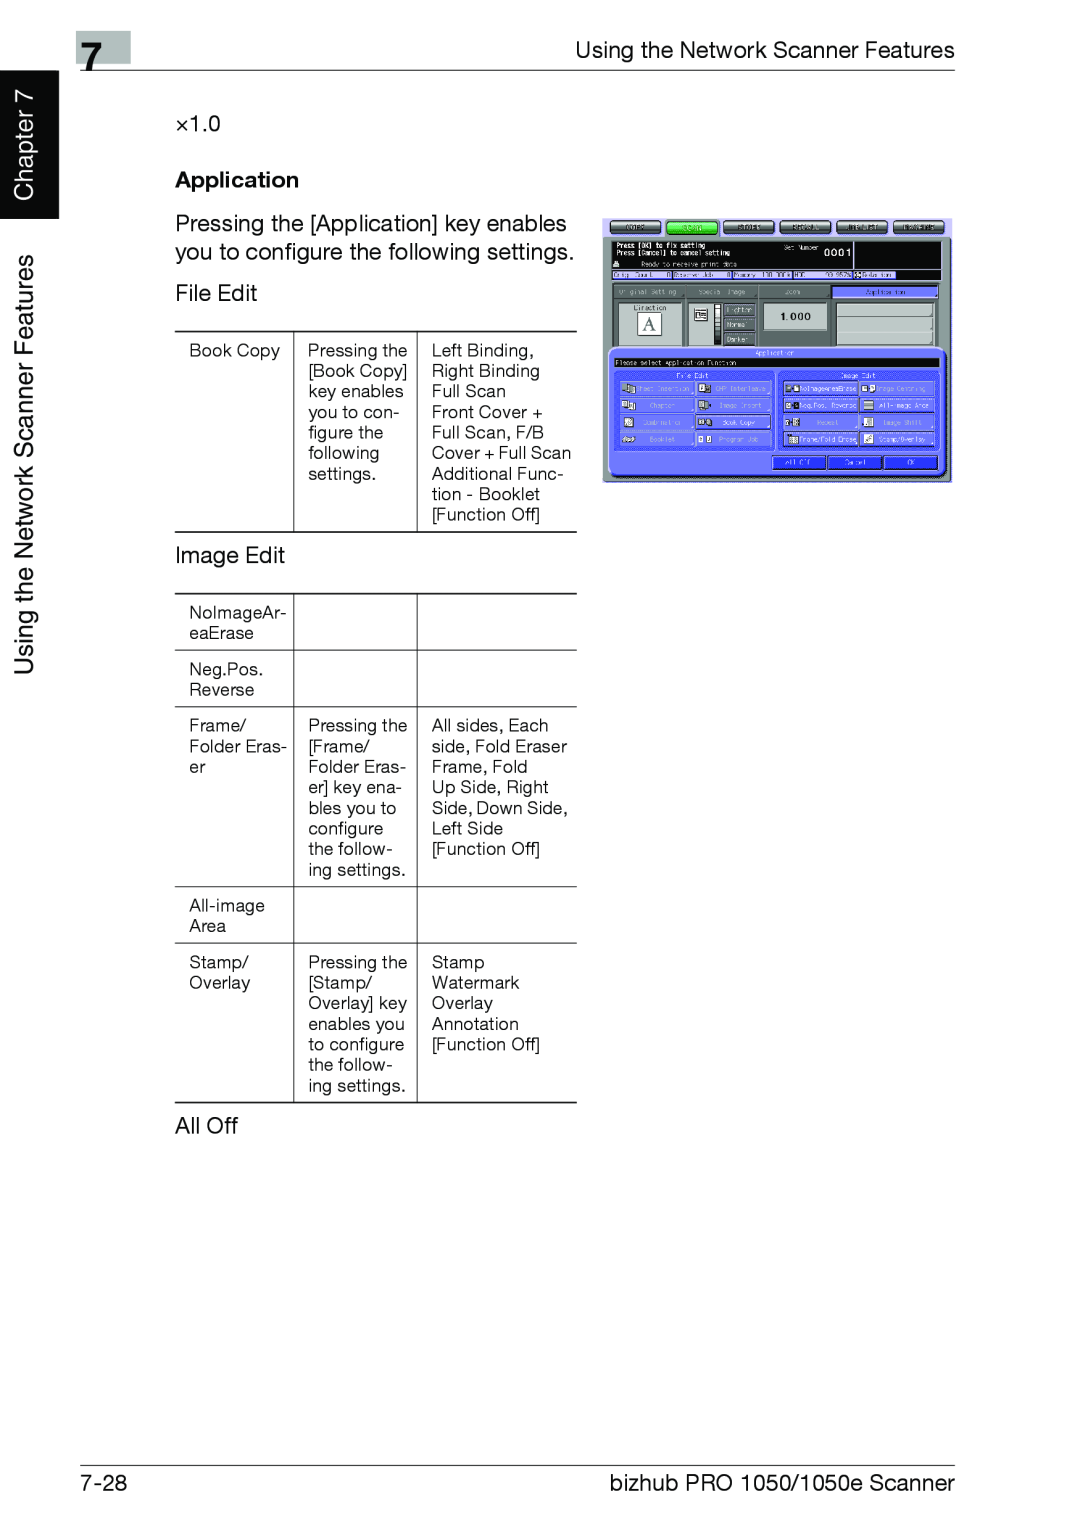 Konica Minolta 1050E Chapter, Using the Network Scanner Features, Application, 7-28, bizhub PRO 1050/1050e Scanner 